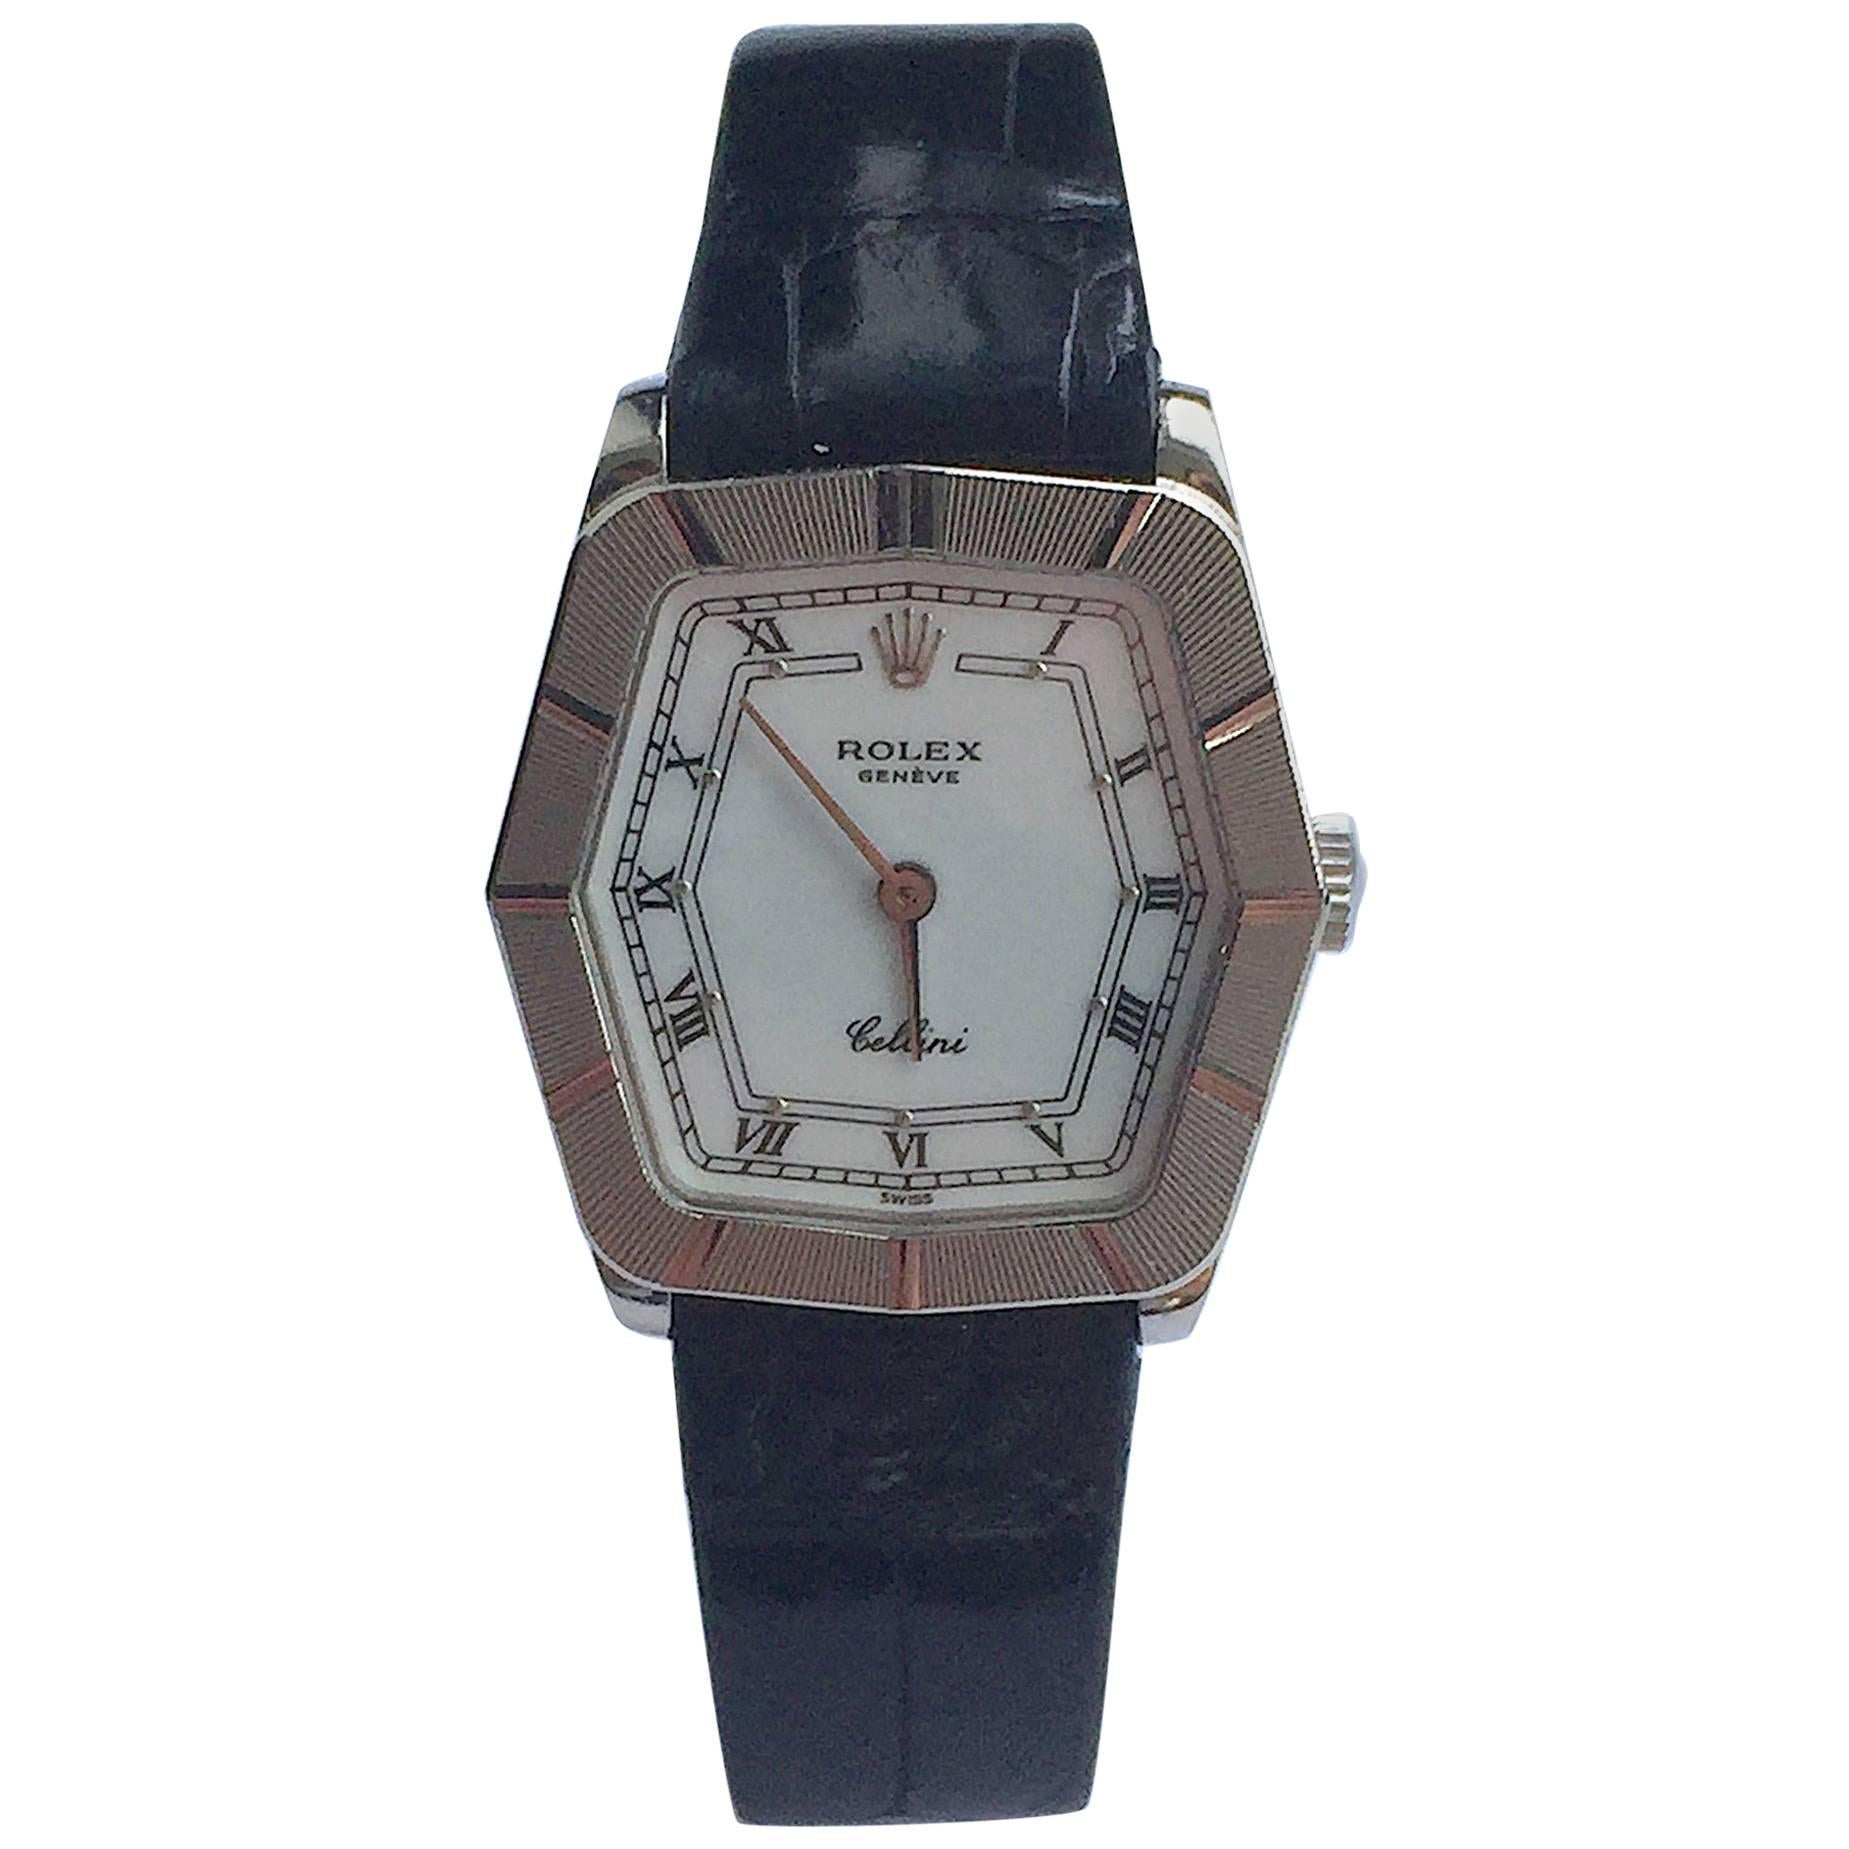 Rolex 18K White Gold Cellini Geometric Manual Wind Wristwatch For Sale